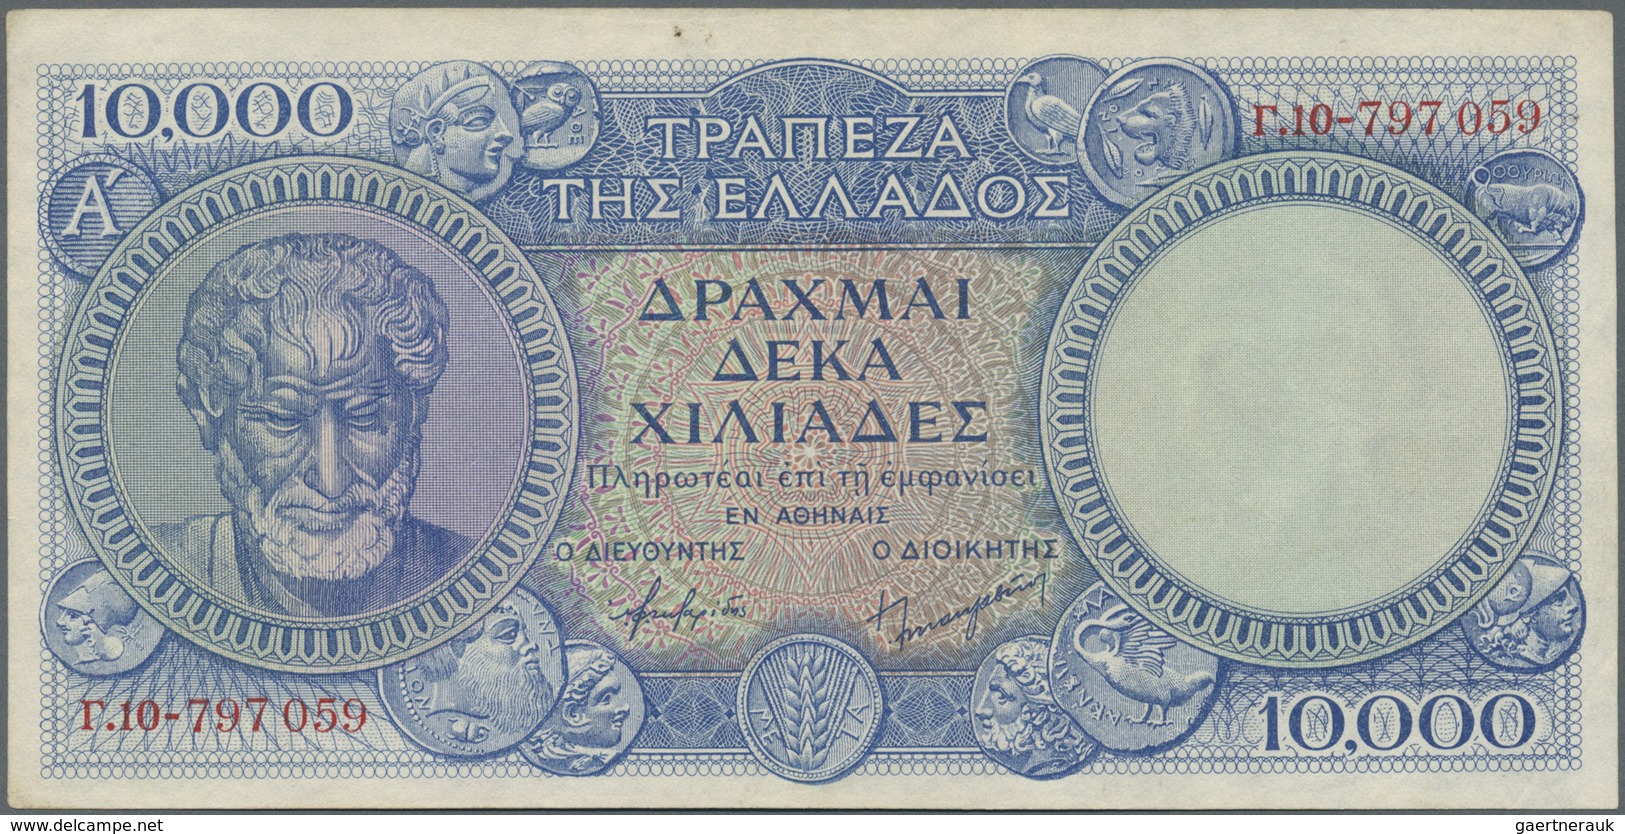 Greece / Griechenland: 10.000 Drachmai ND(1946) P. 175, Unfolded, Light Creases At Borders, Crisp An - Greece